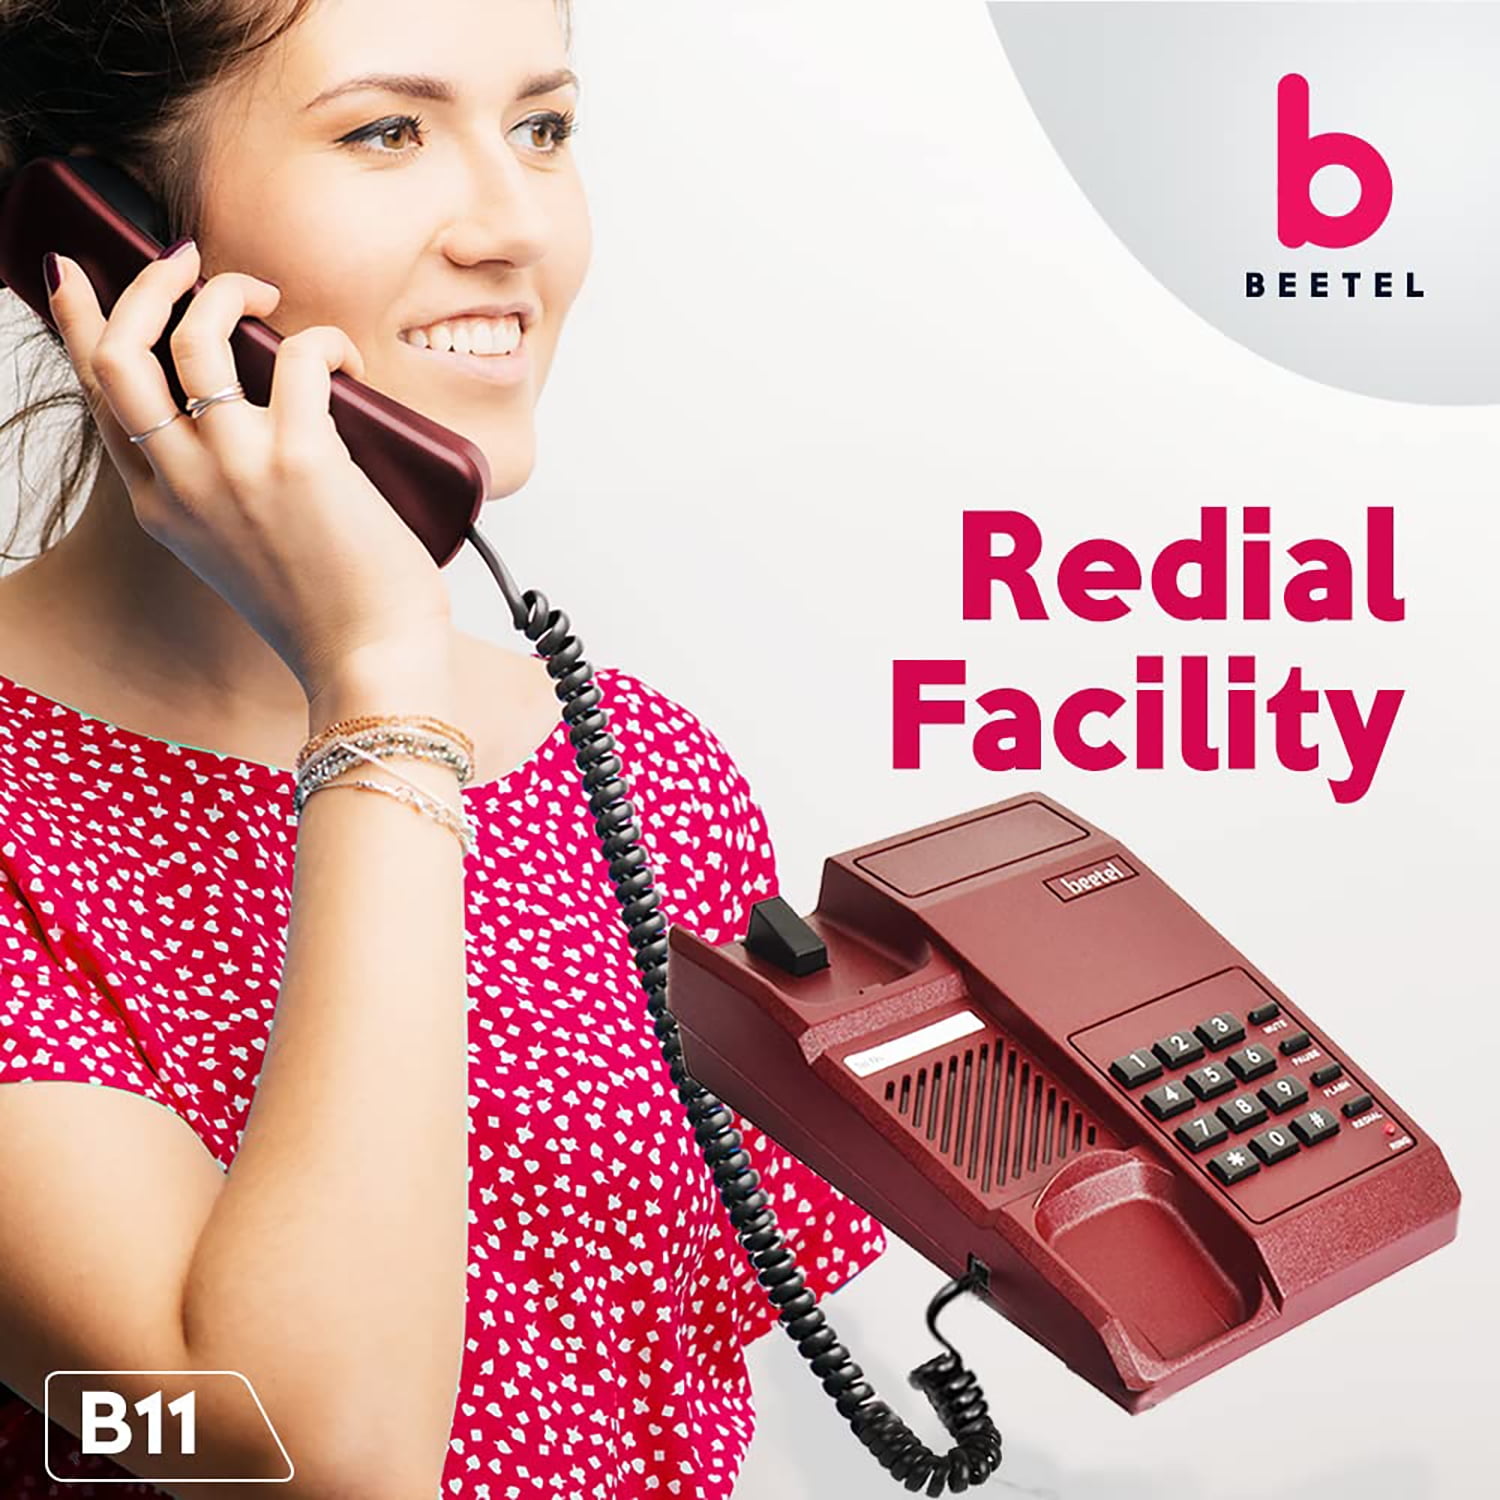 Beetel M51 LandLine Phone (Dark Red) : Amazon.in: Electronics